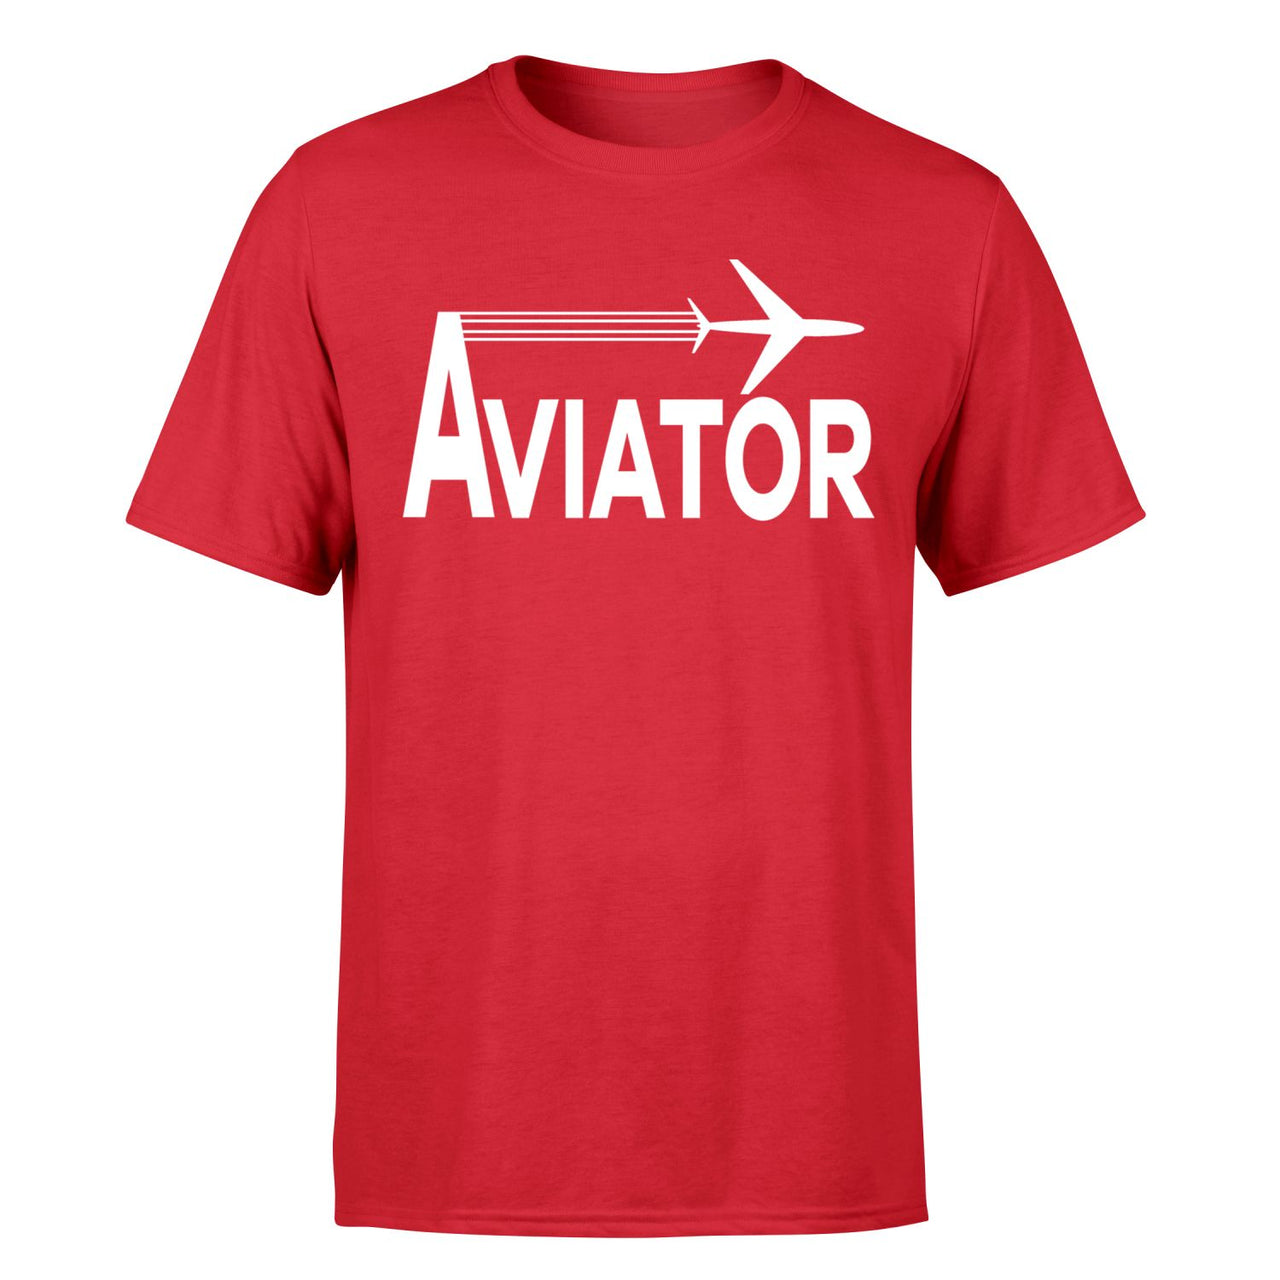 Aviator Designed T-Shirts